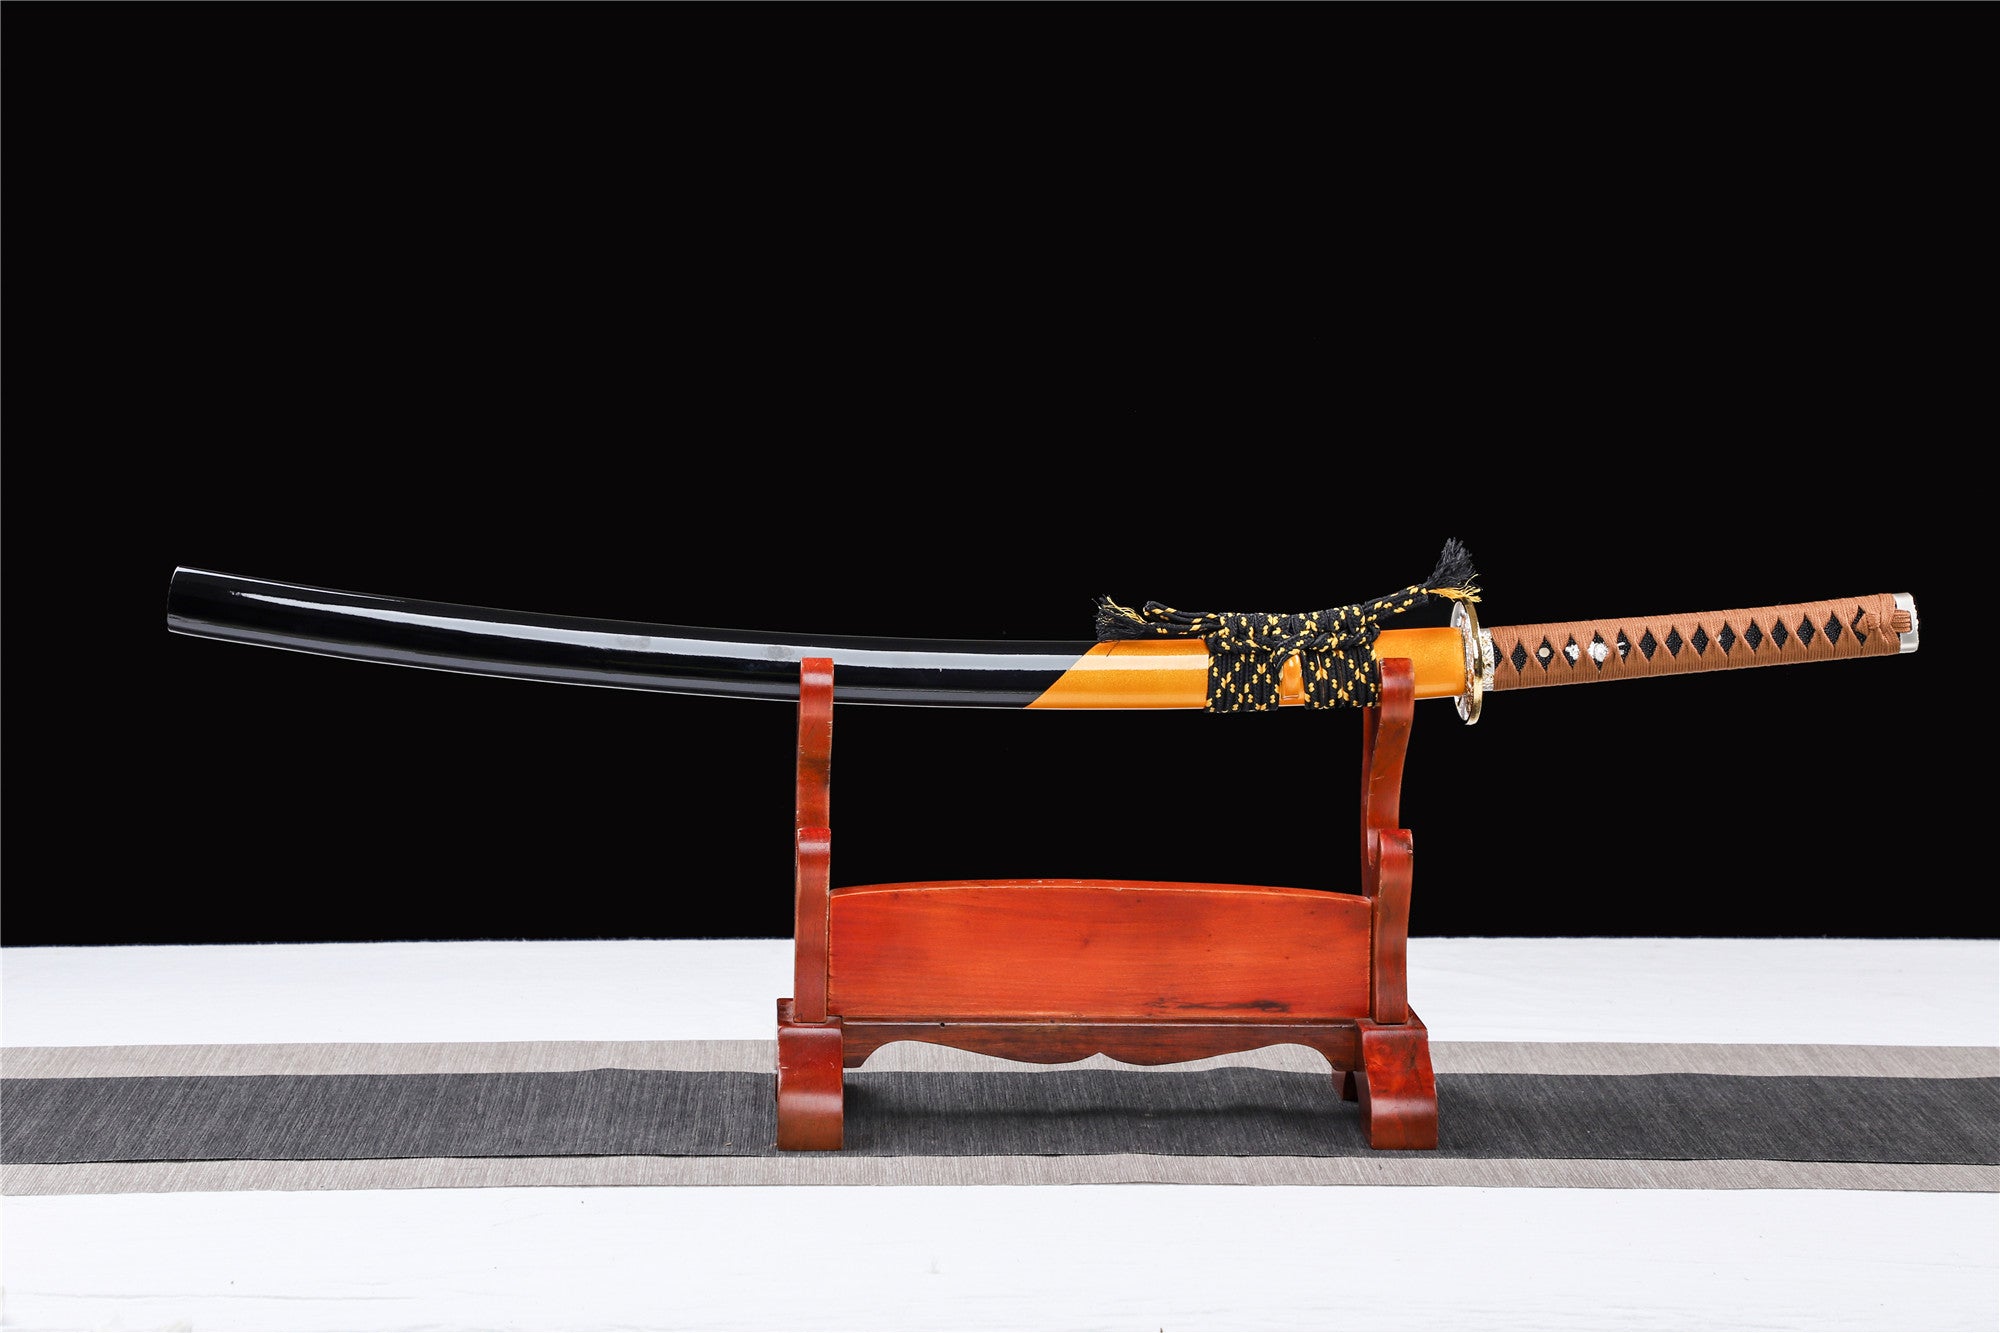 Two-Color Katana,Black and yellow,Wooden Katana,Japanese Samurai Sword,Handmade Wooden Sword,Bamboo Blade